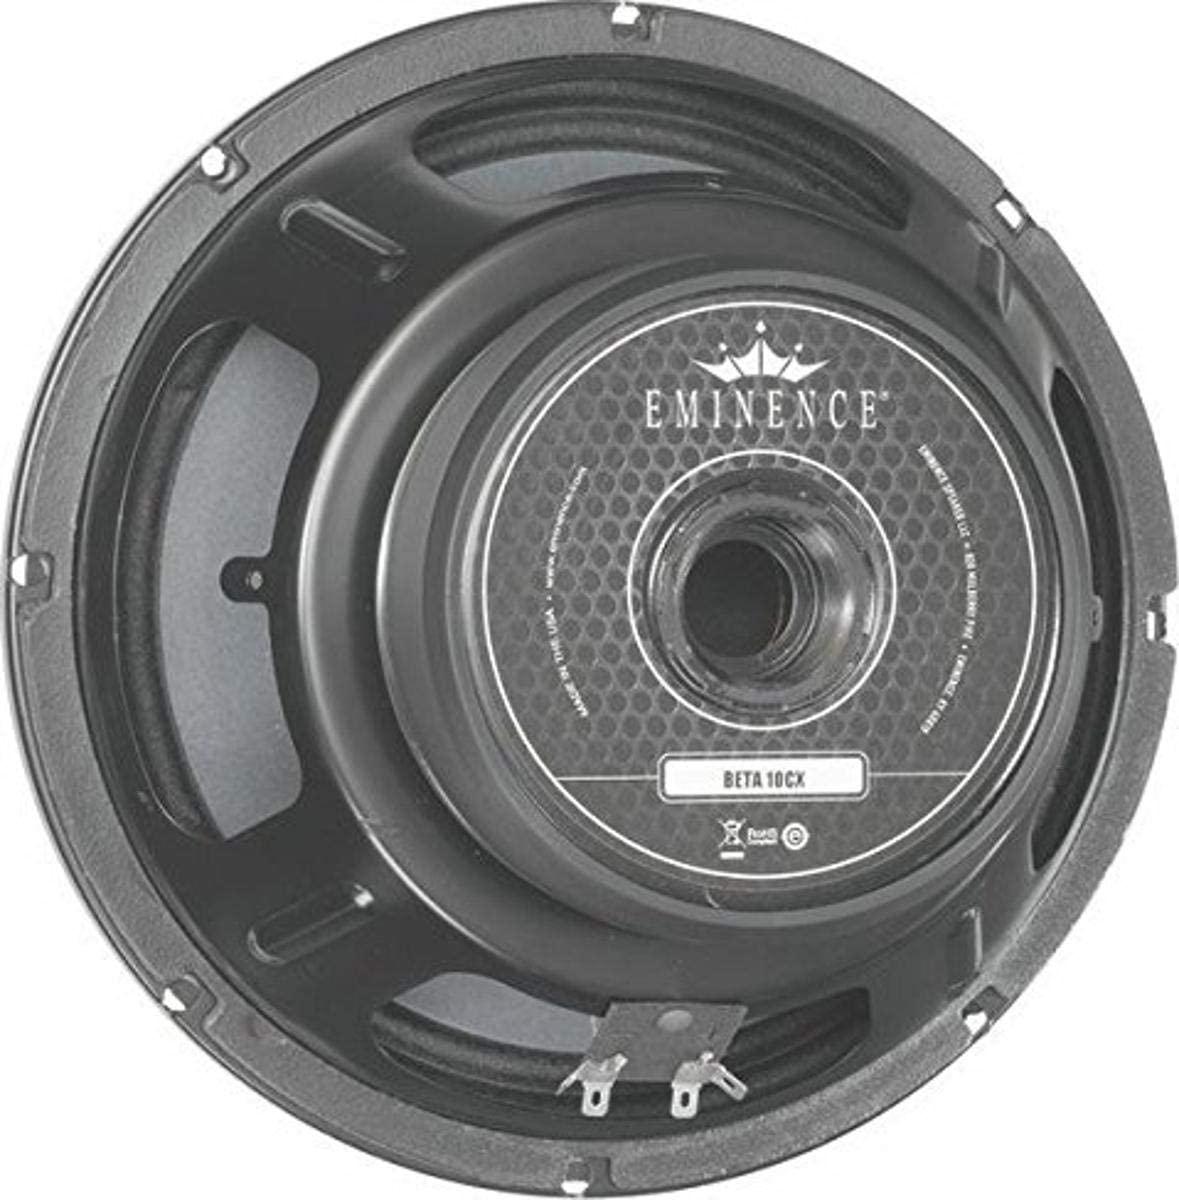 EMINENCE, EMINENCE BETA10CX 10-Inch American Standard Series Speakers